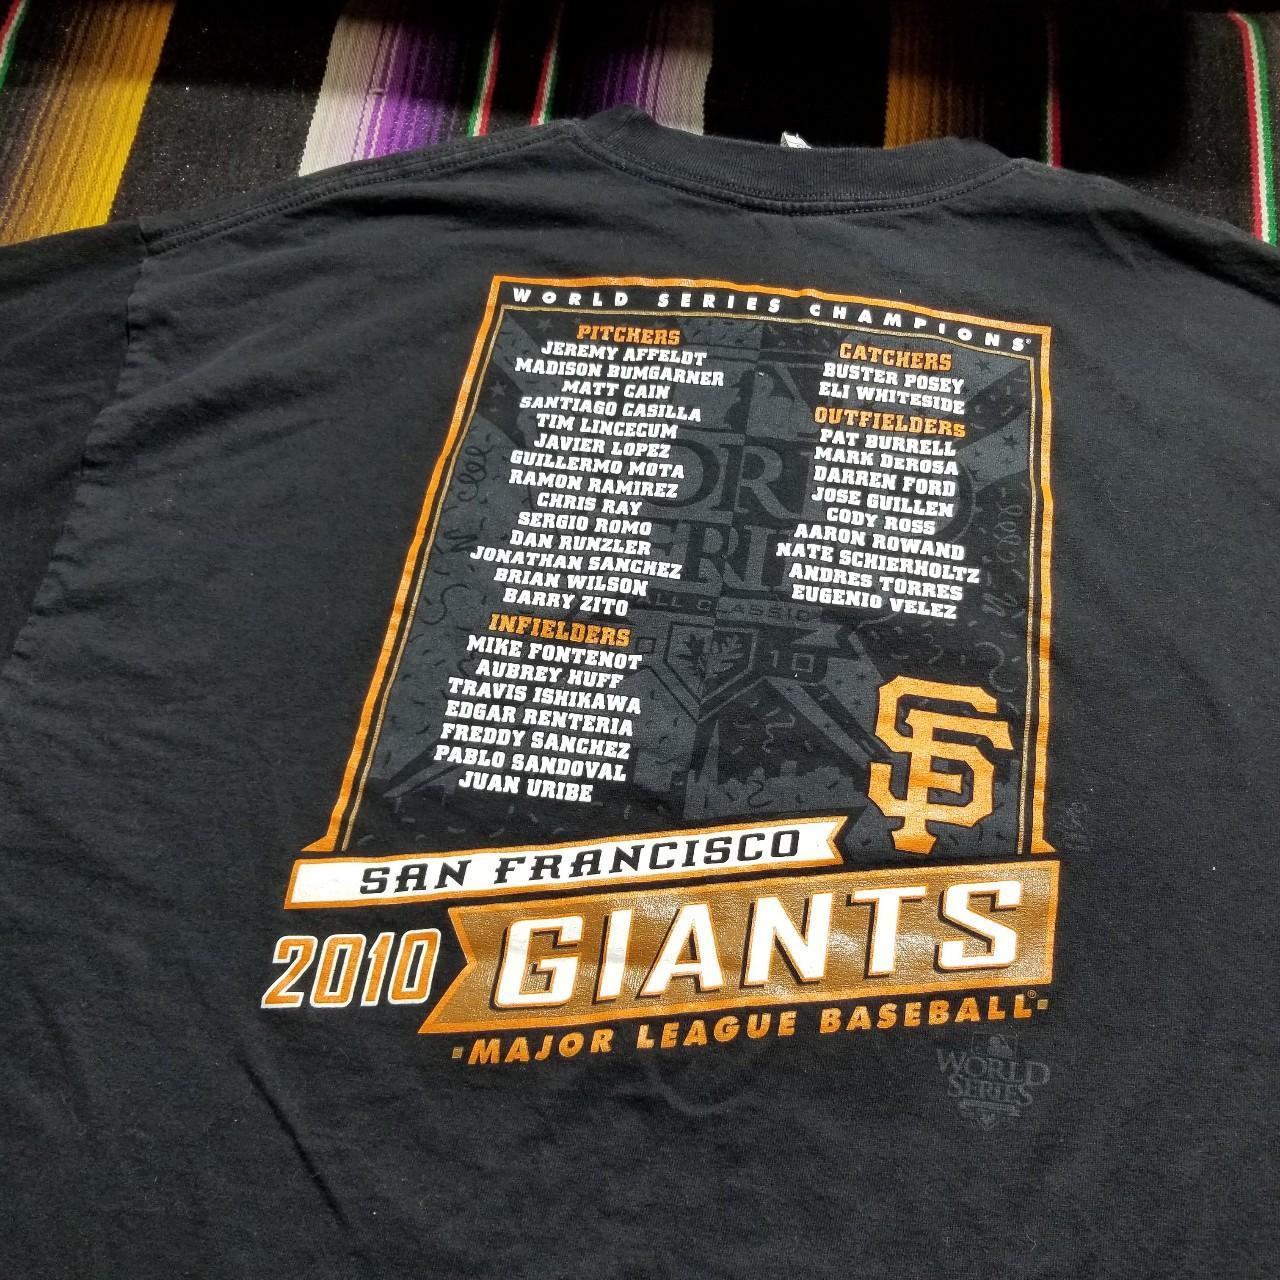 San Francisco Giants MLB 2010 World Series Champions T-Shirt - XL